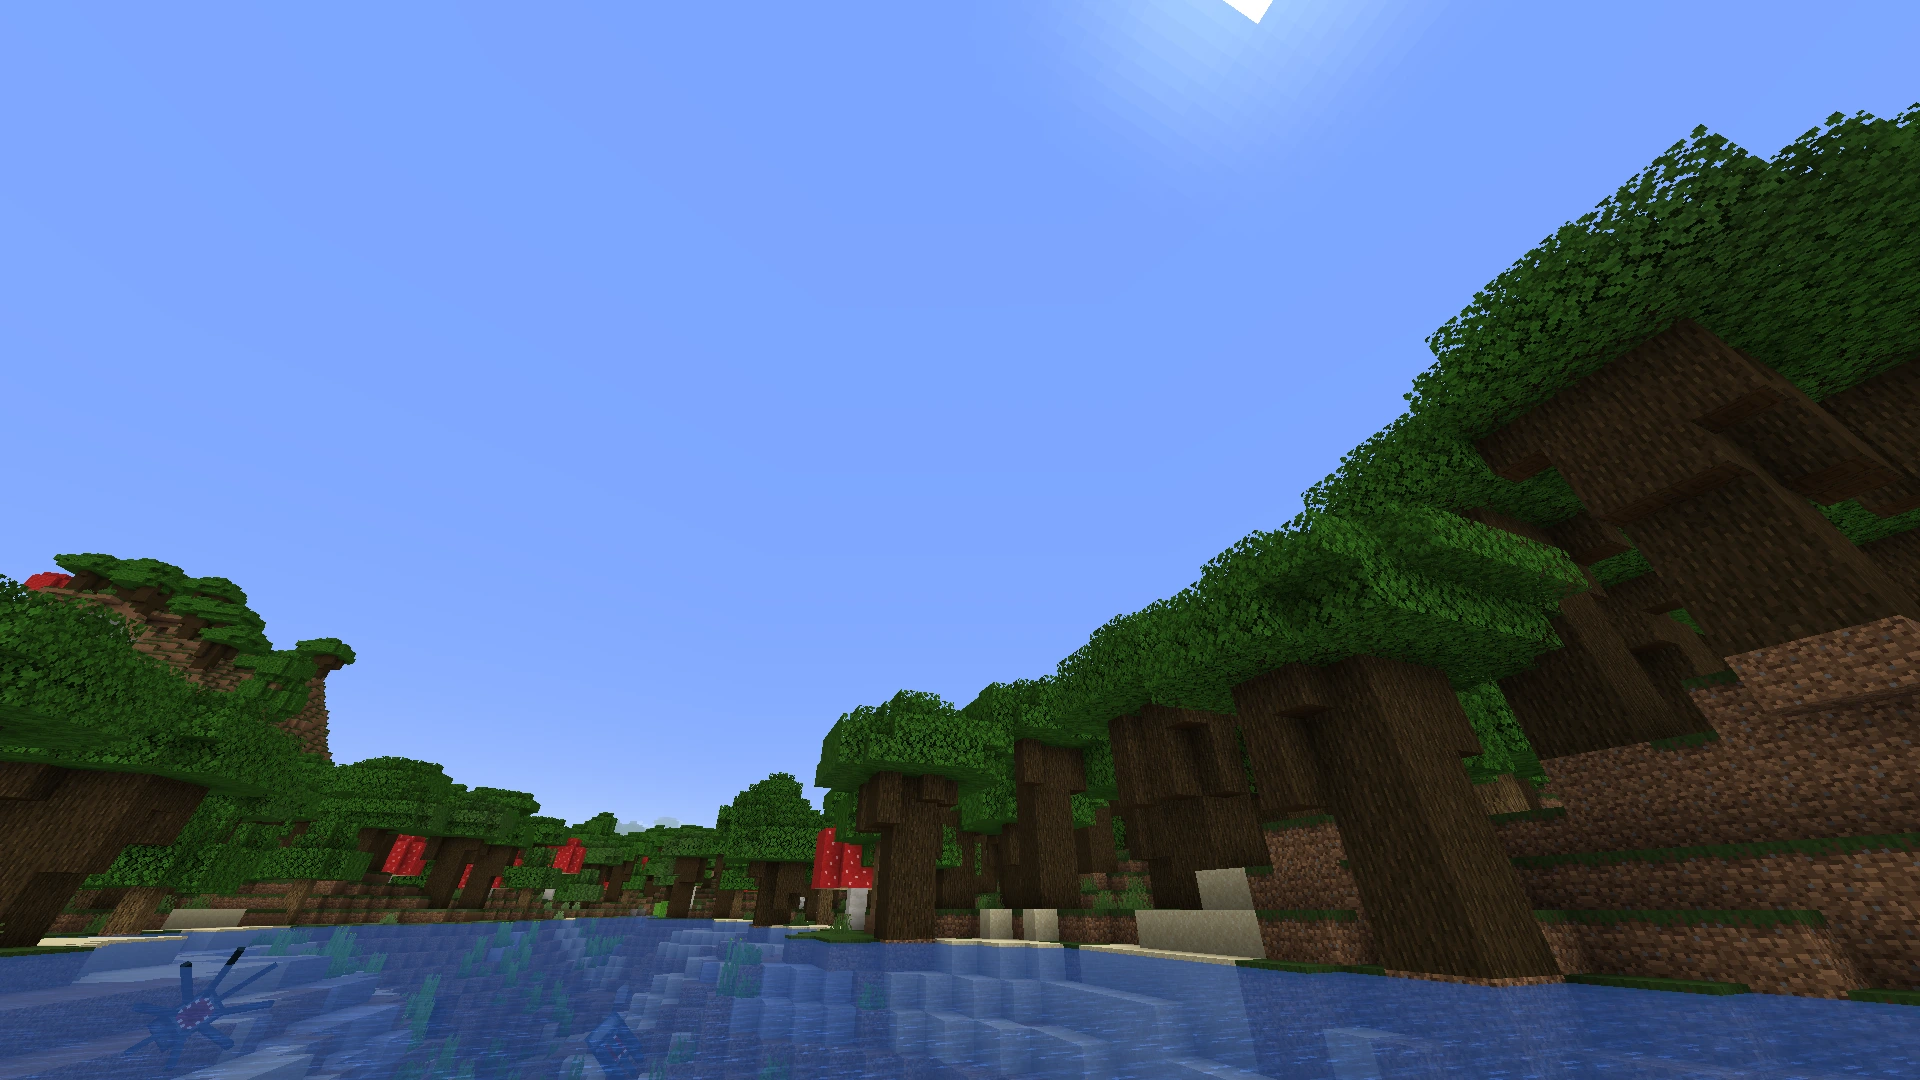 Dark oak forest in Minecraft near a river